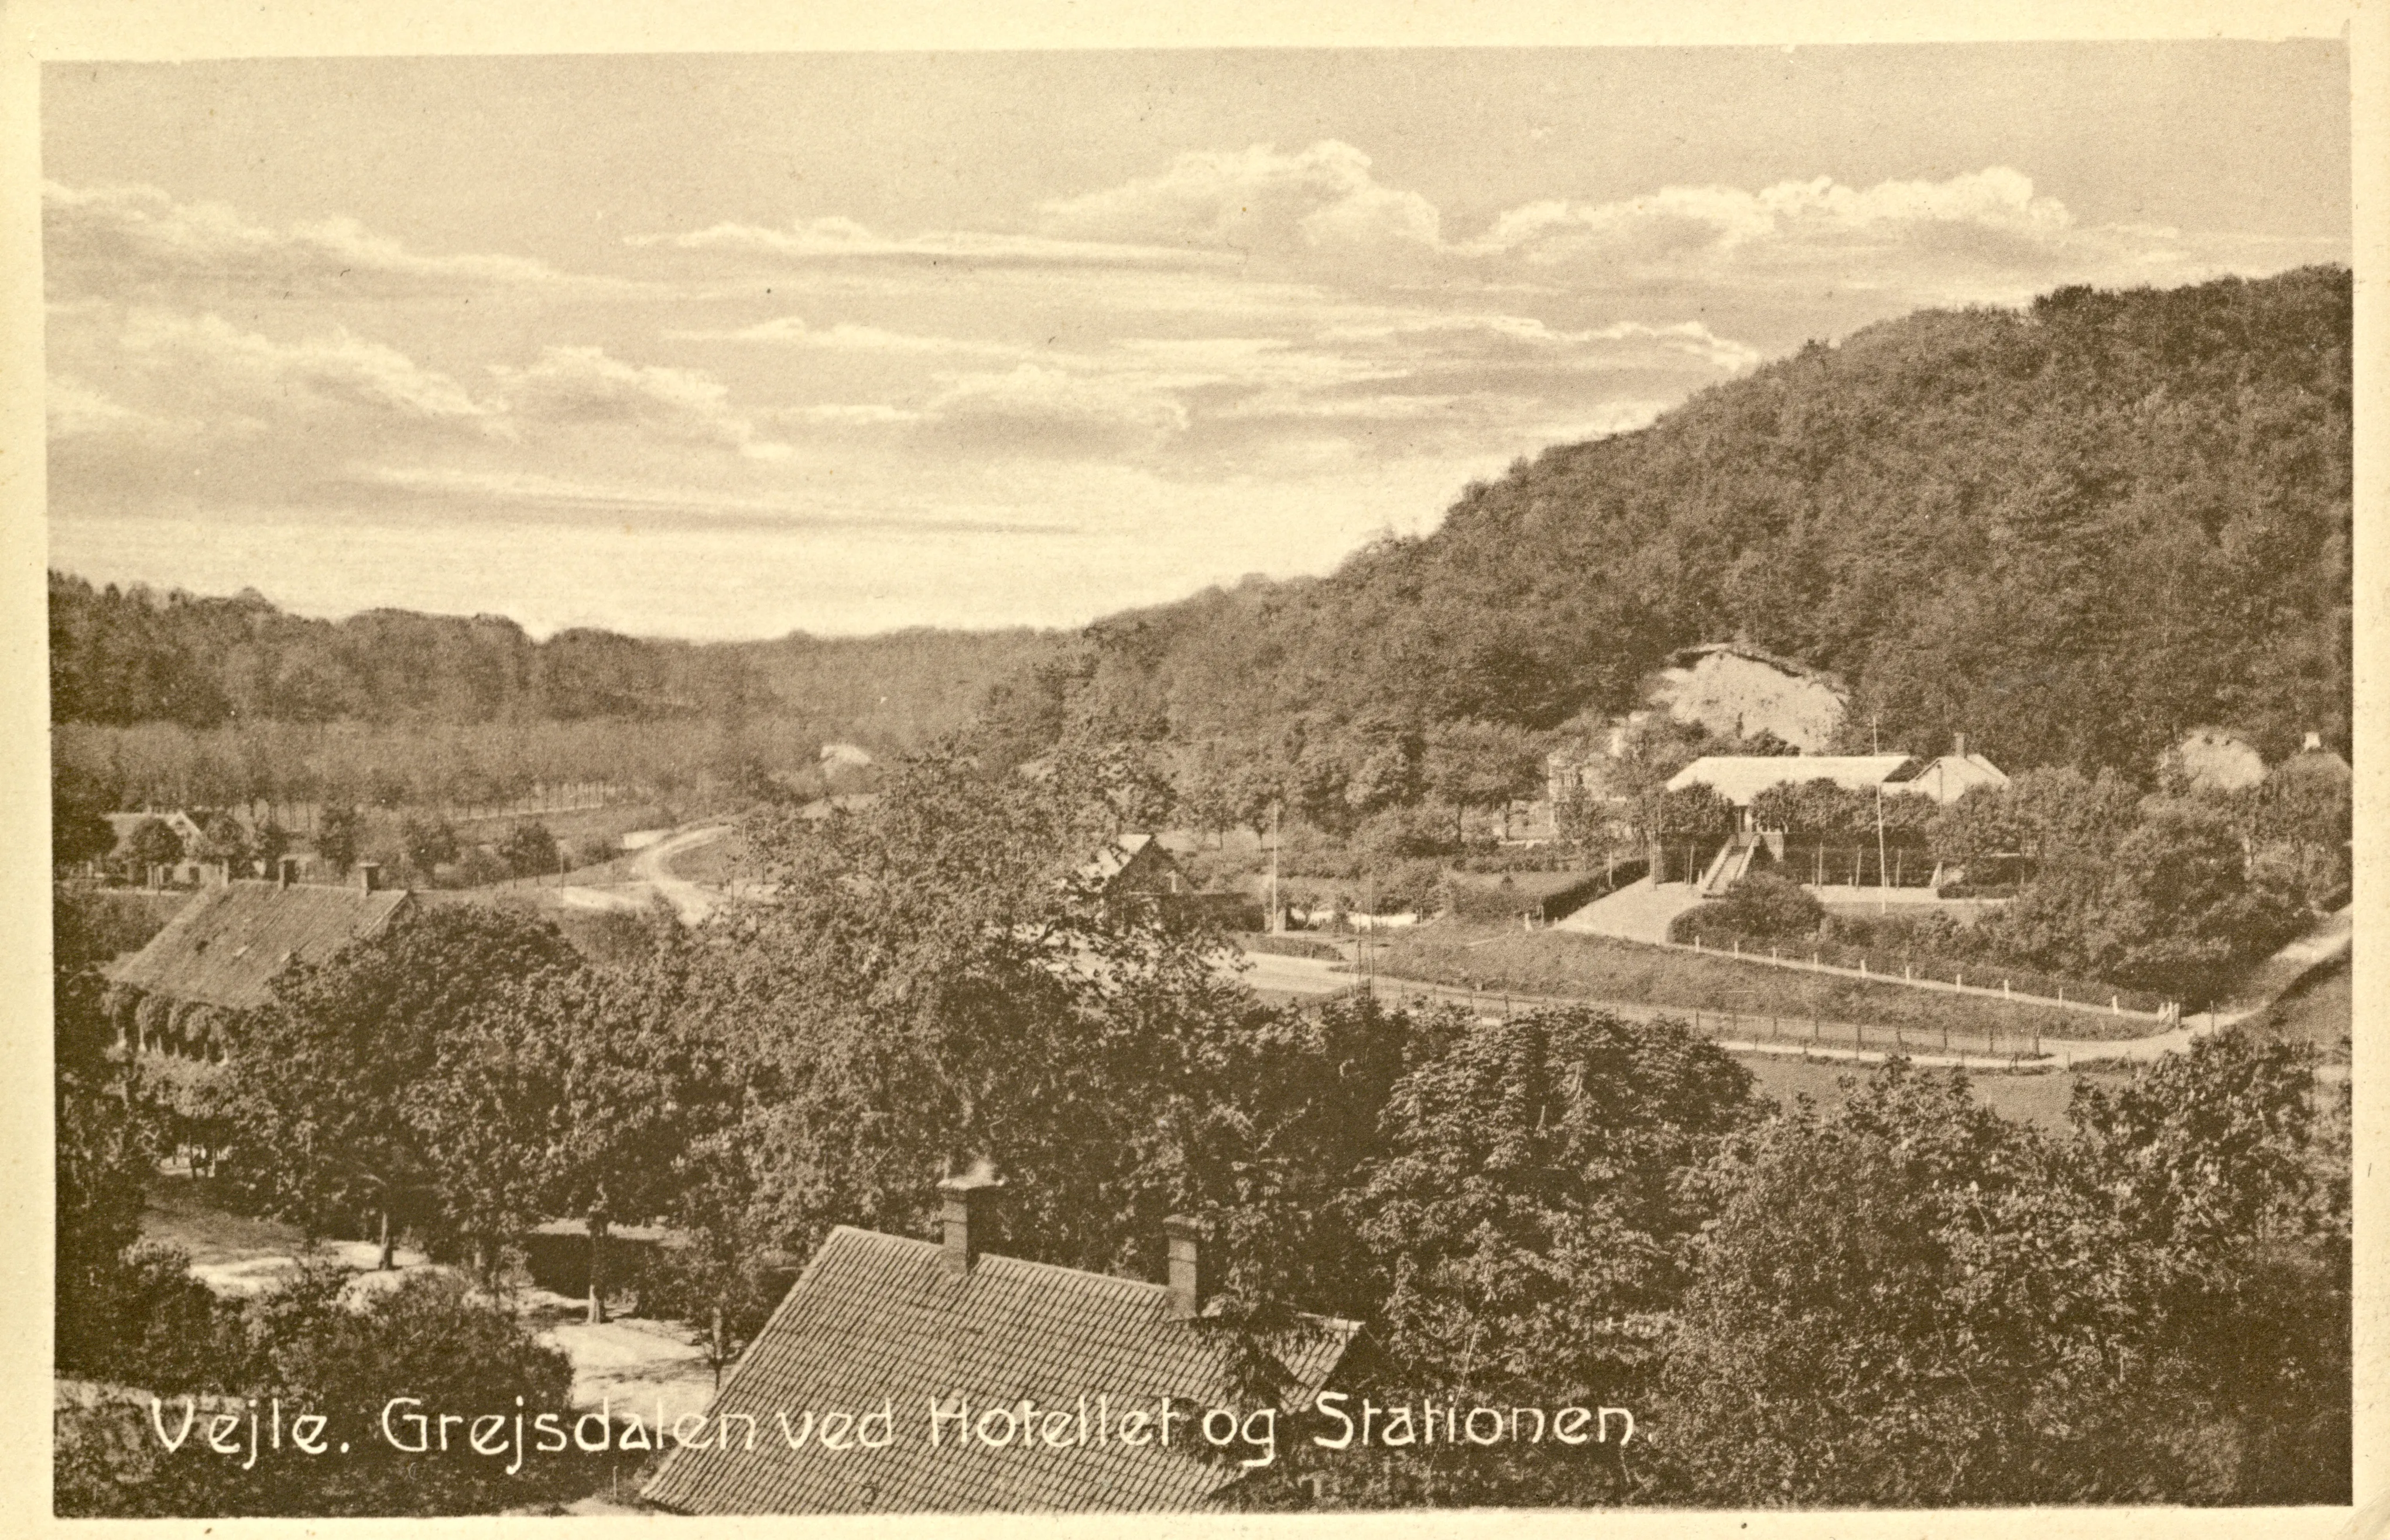 Postkort med Grejsdal Privatbanestation.